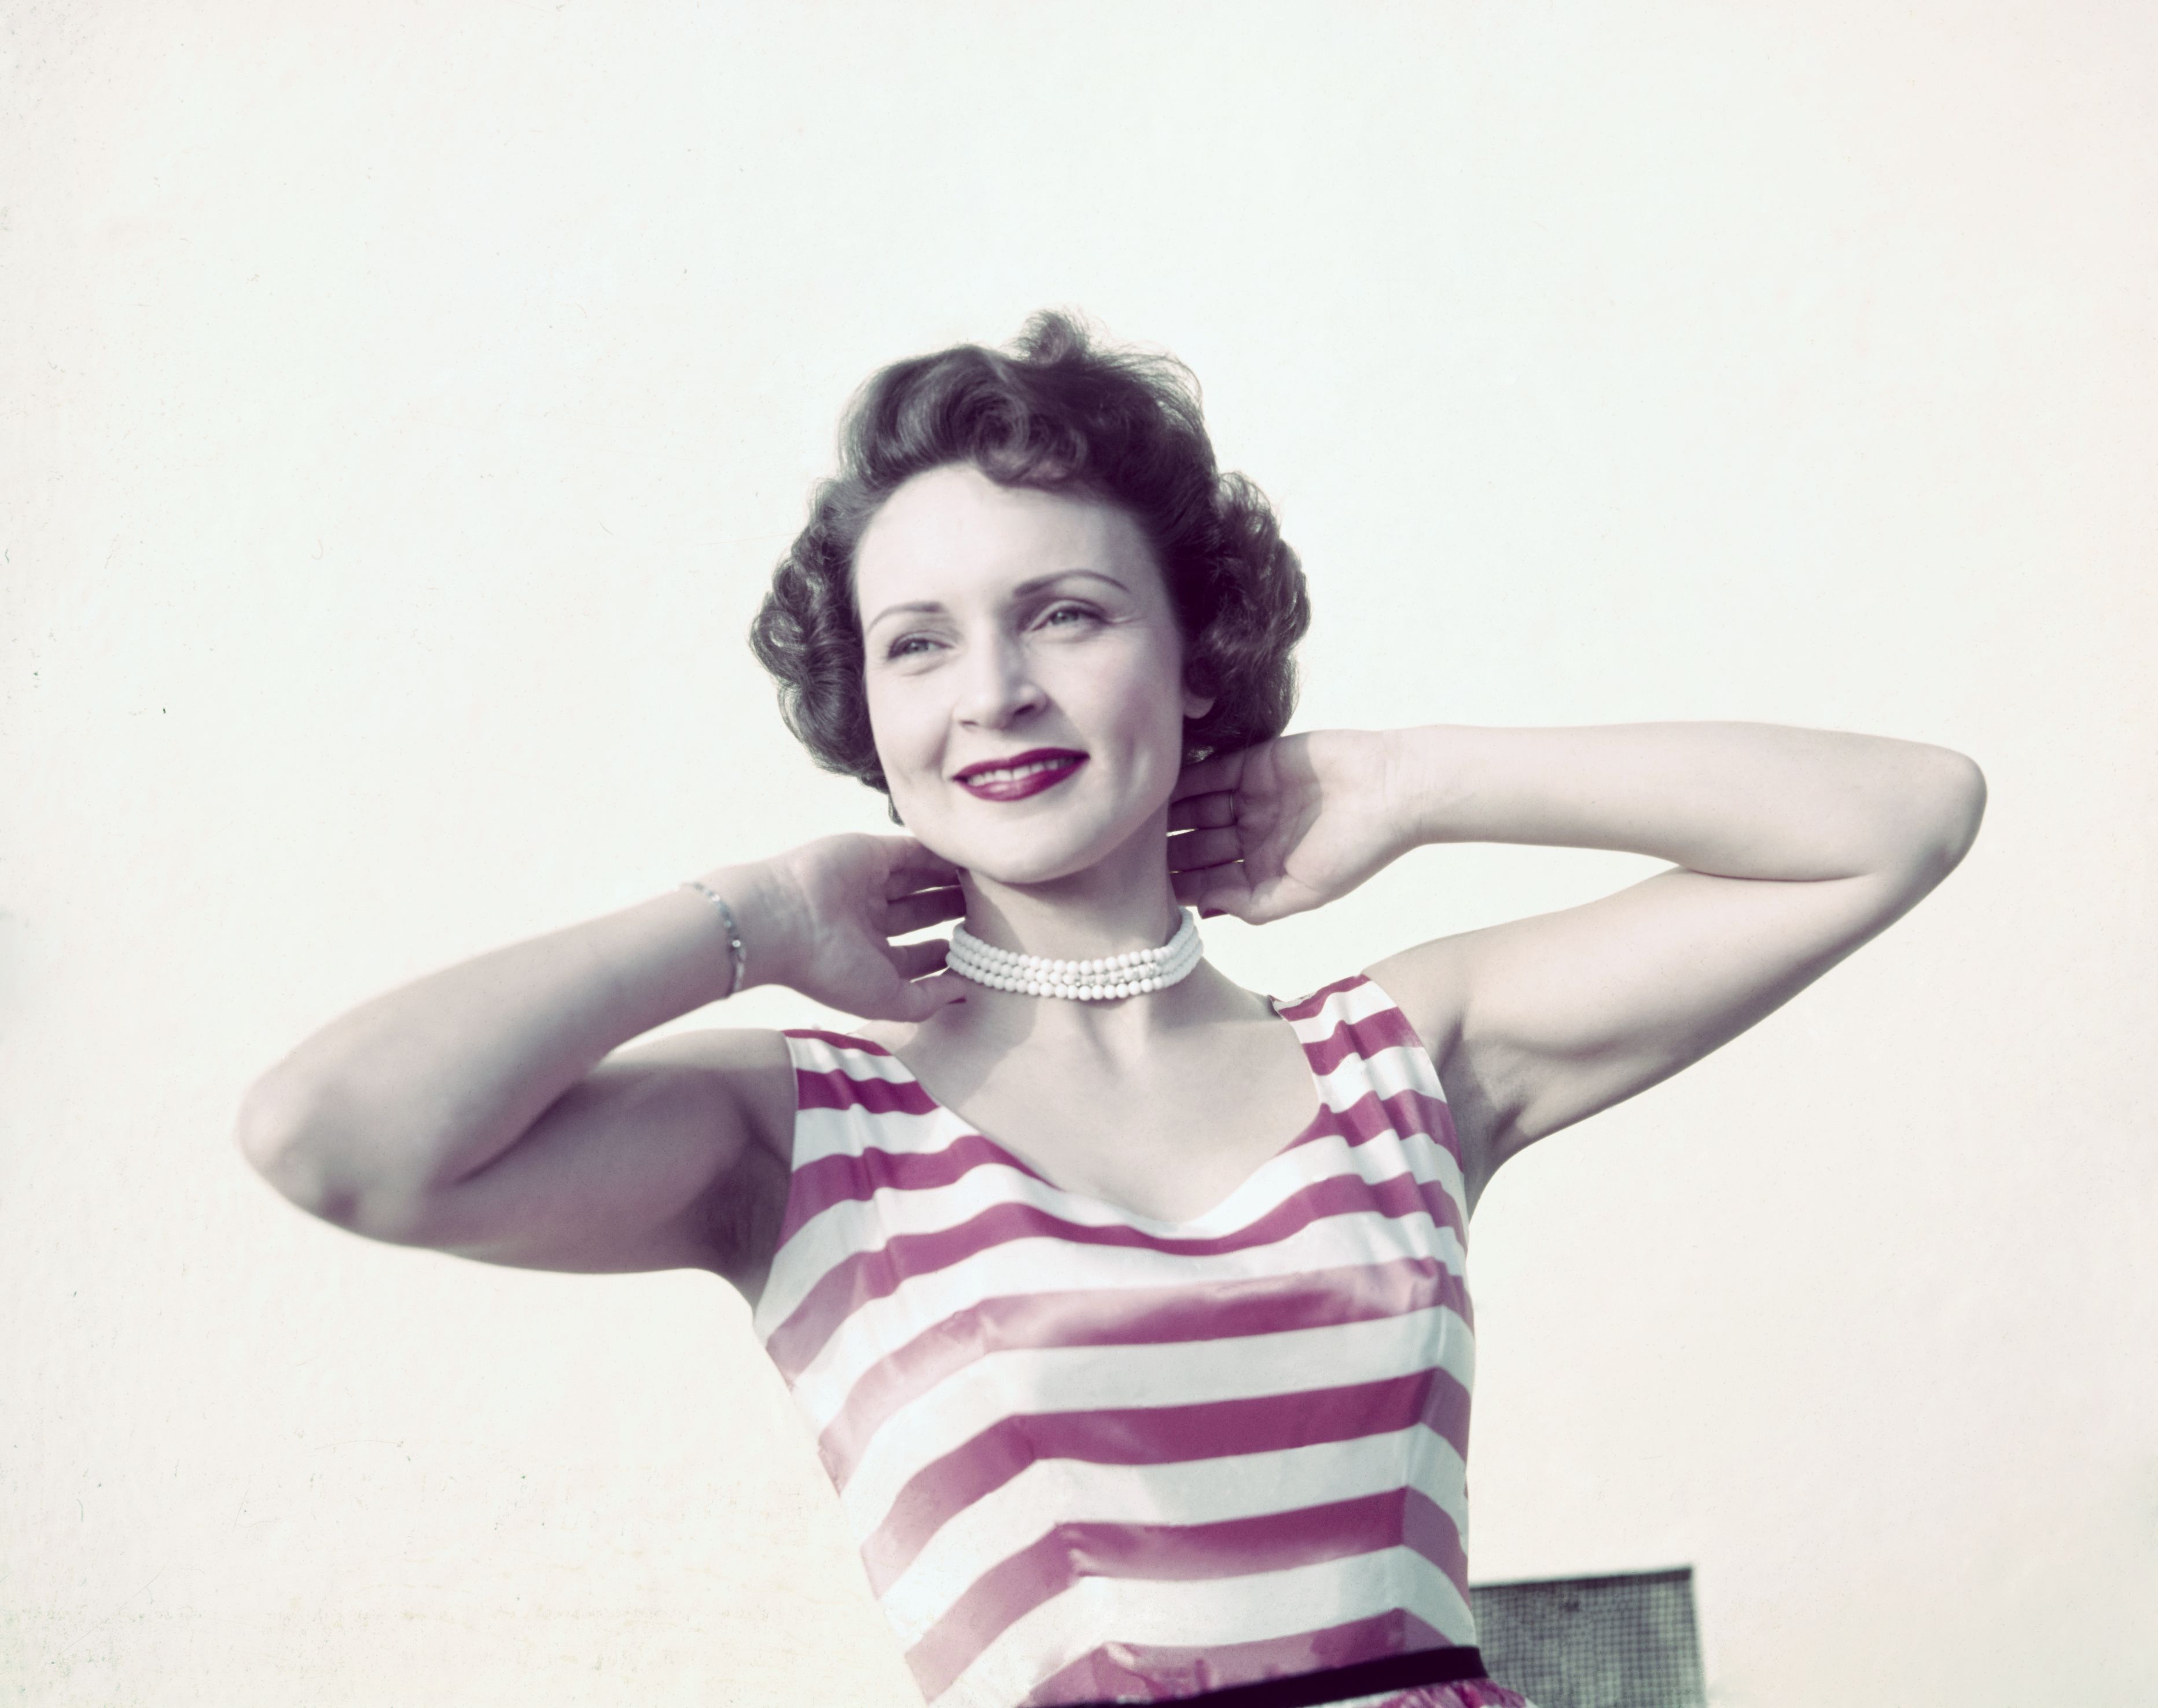 unbiased entertainment news source, Happy 100th Birthday Betty White! 